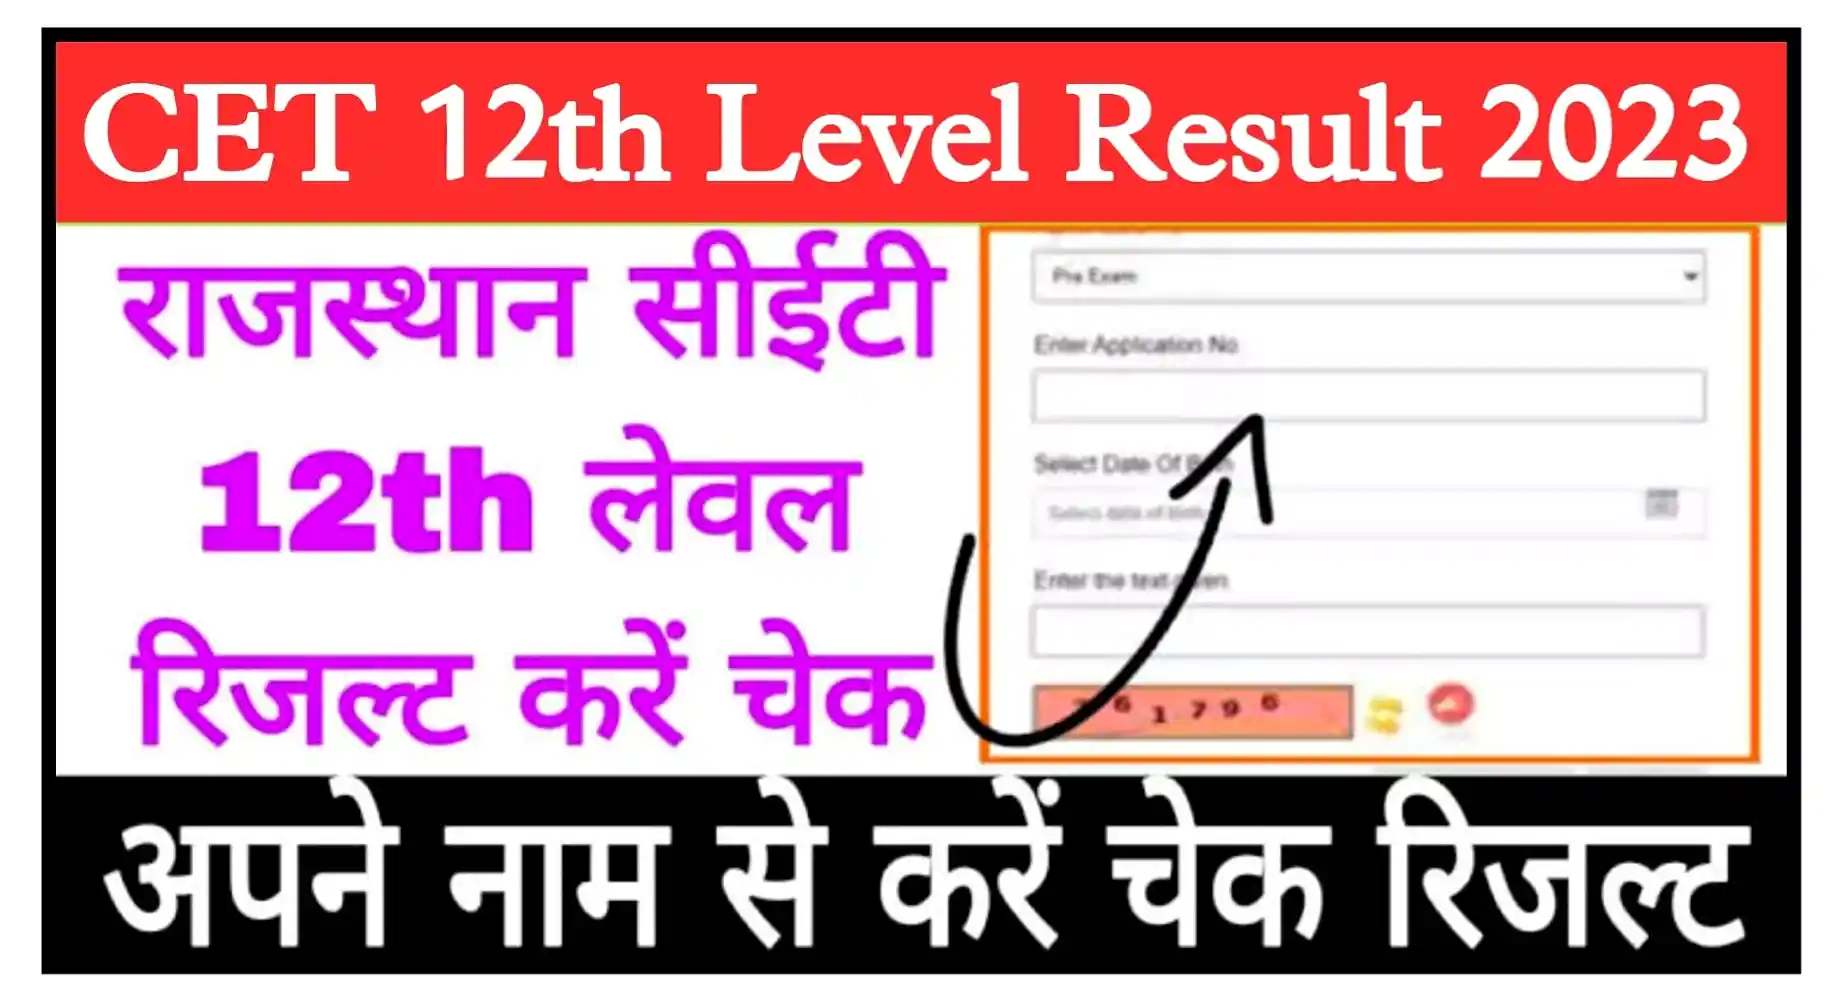 Rajasthan CET Senior Secondary Level Result 2023 Name Wise Check Link @rsmssb.rajasthan.gov.in